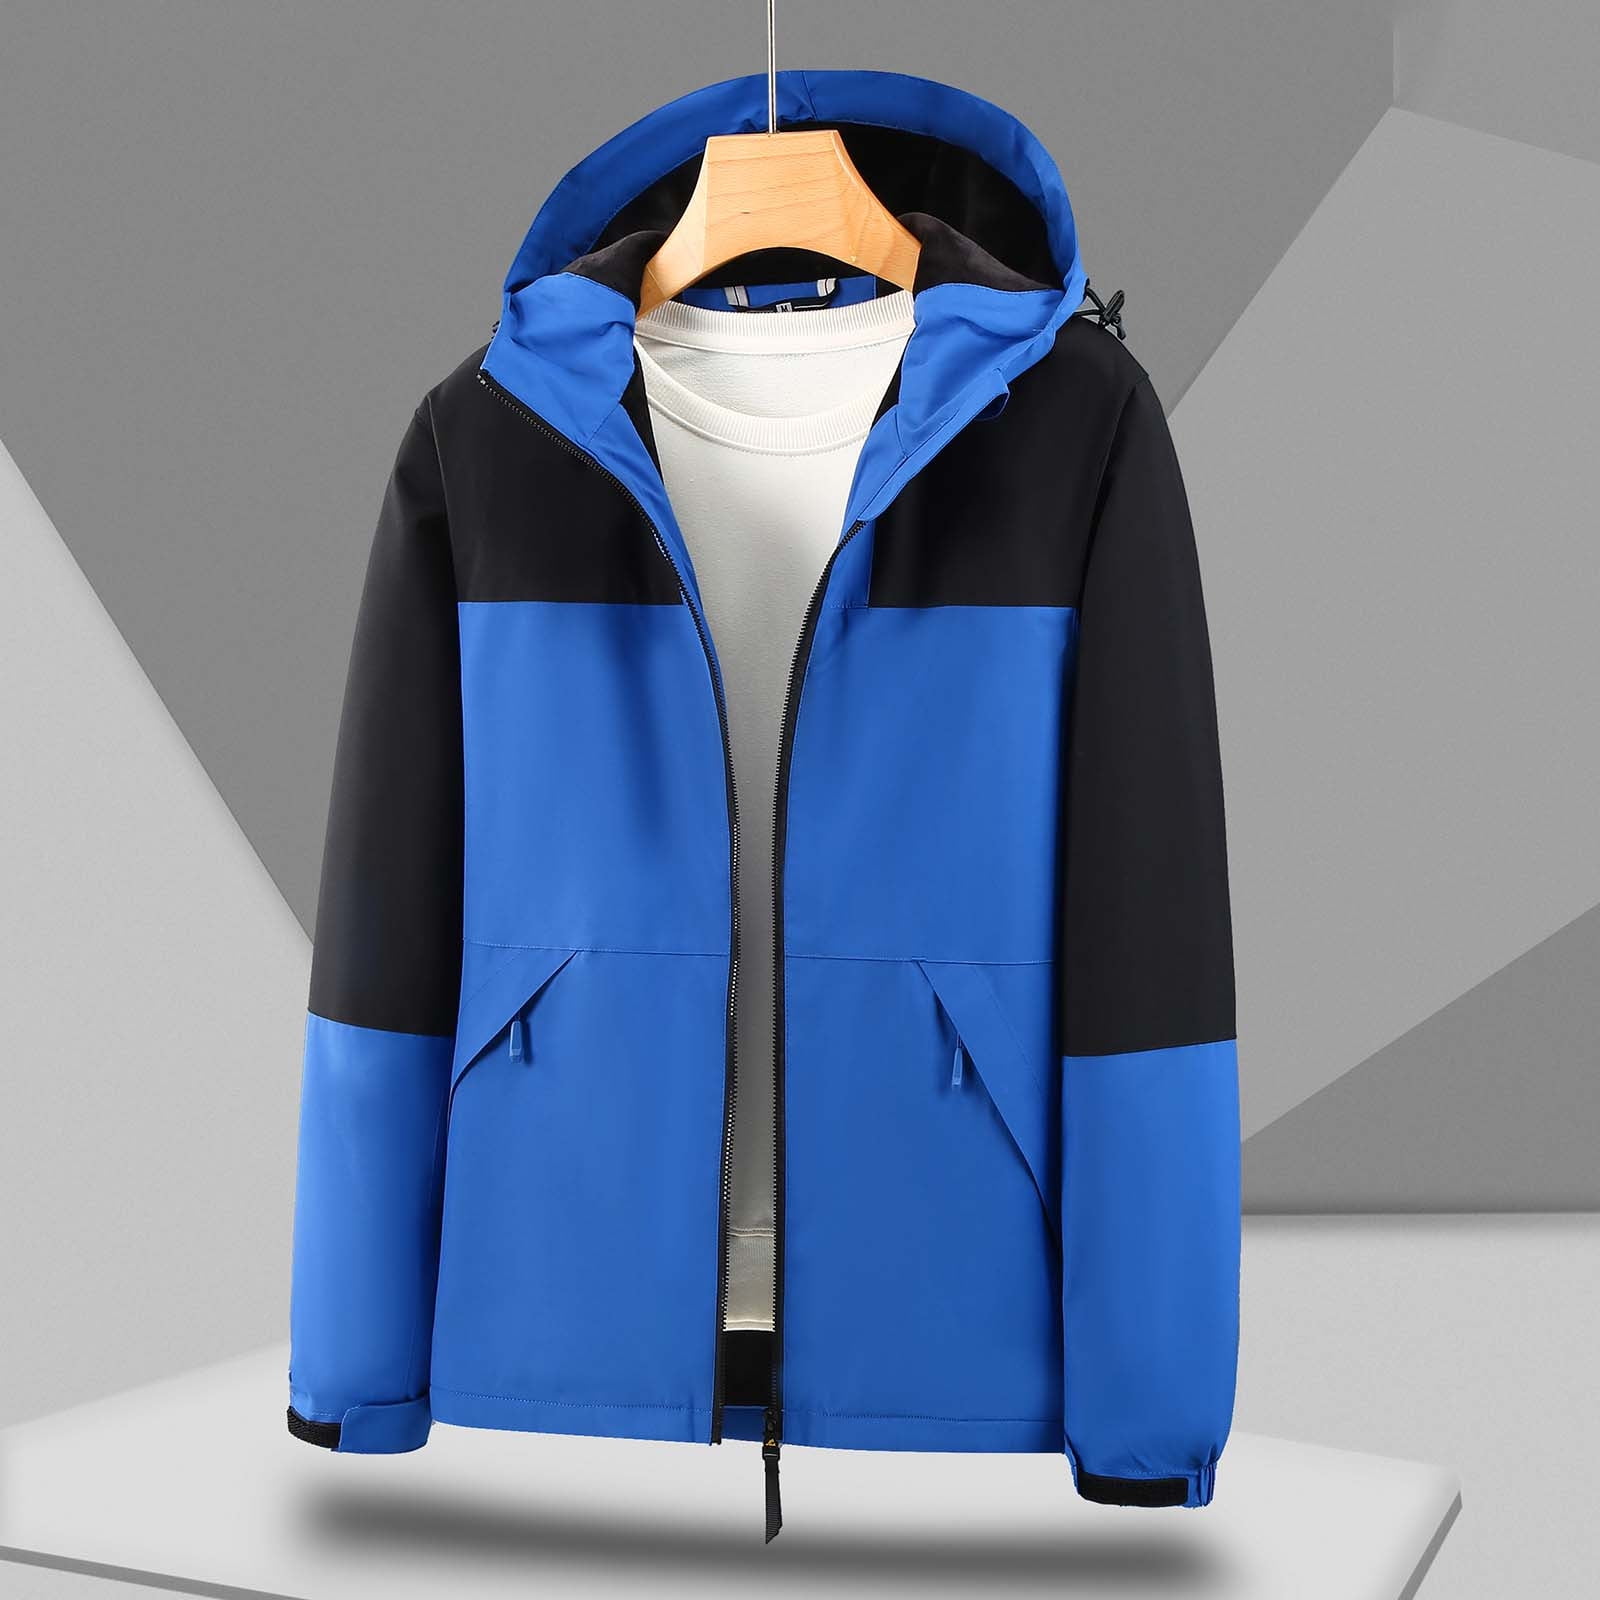 Fatuov Faux Leather jacket for Men Winter Hooded Long Sleeve Fashion Blue  Jackets 